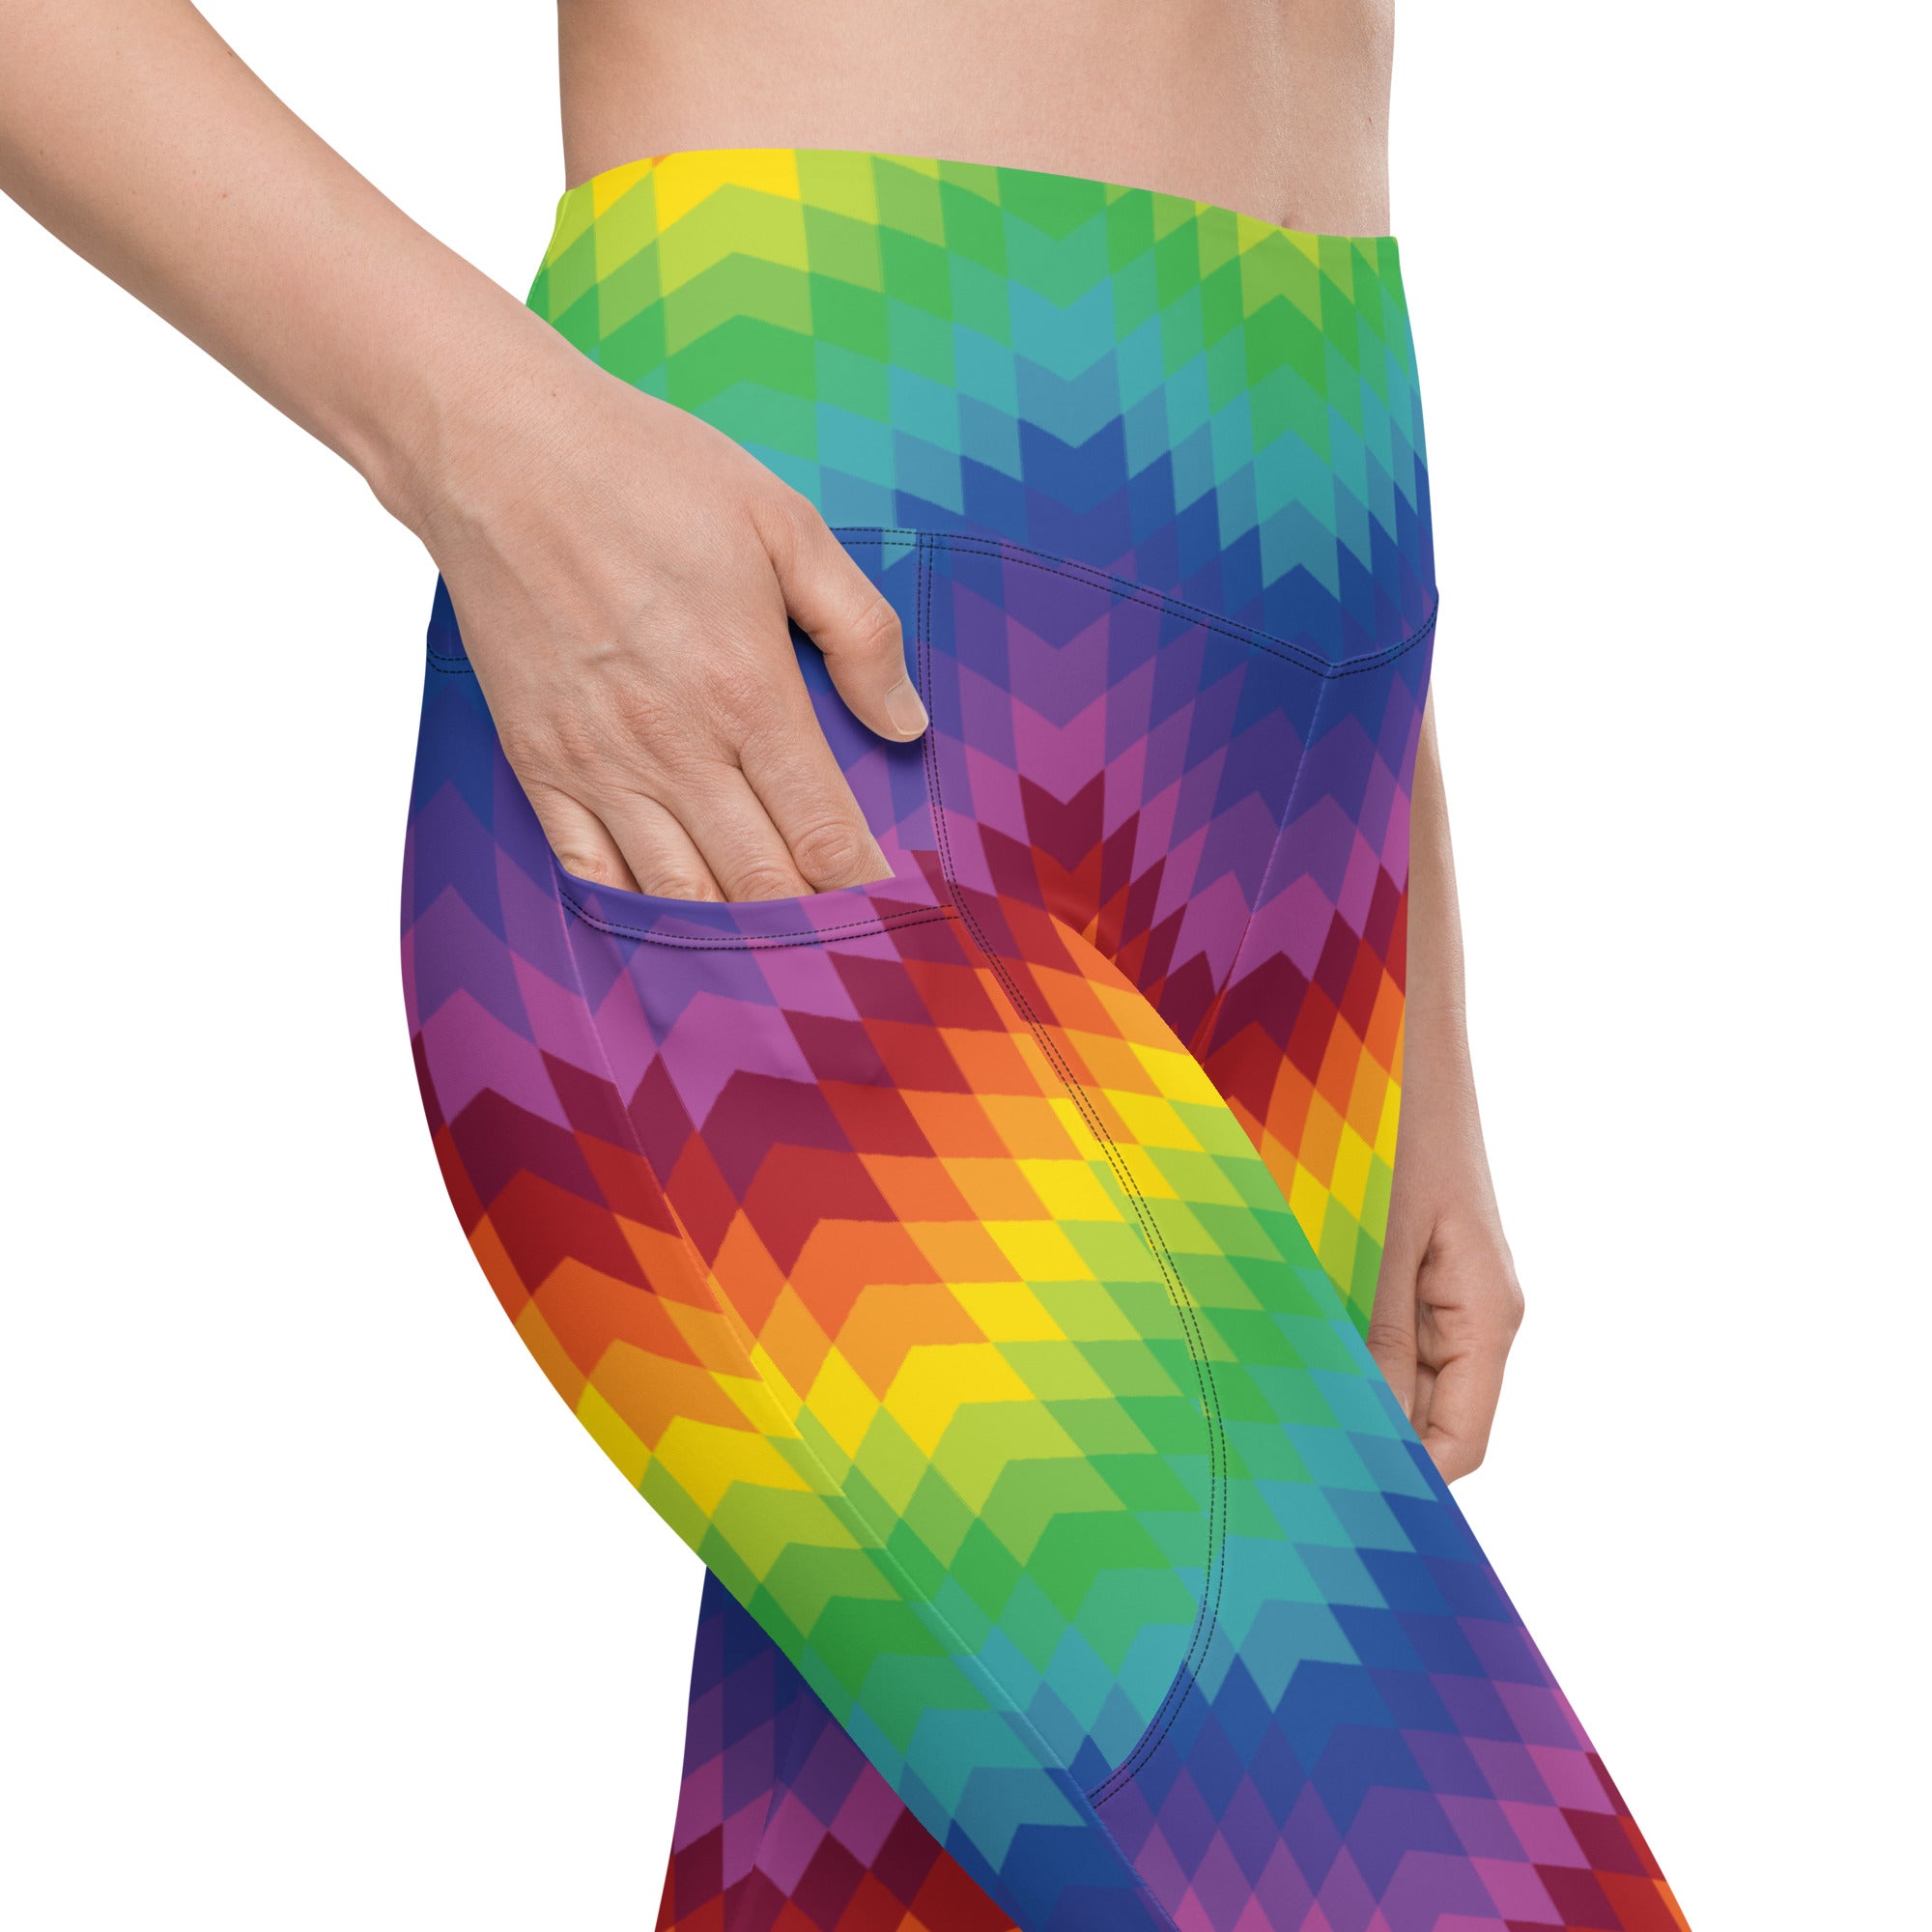 Rainbow Pattern Leggings With Pockets